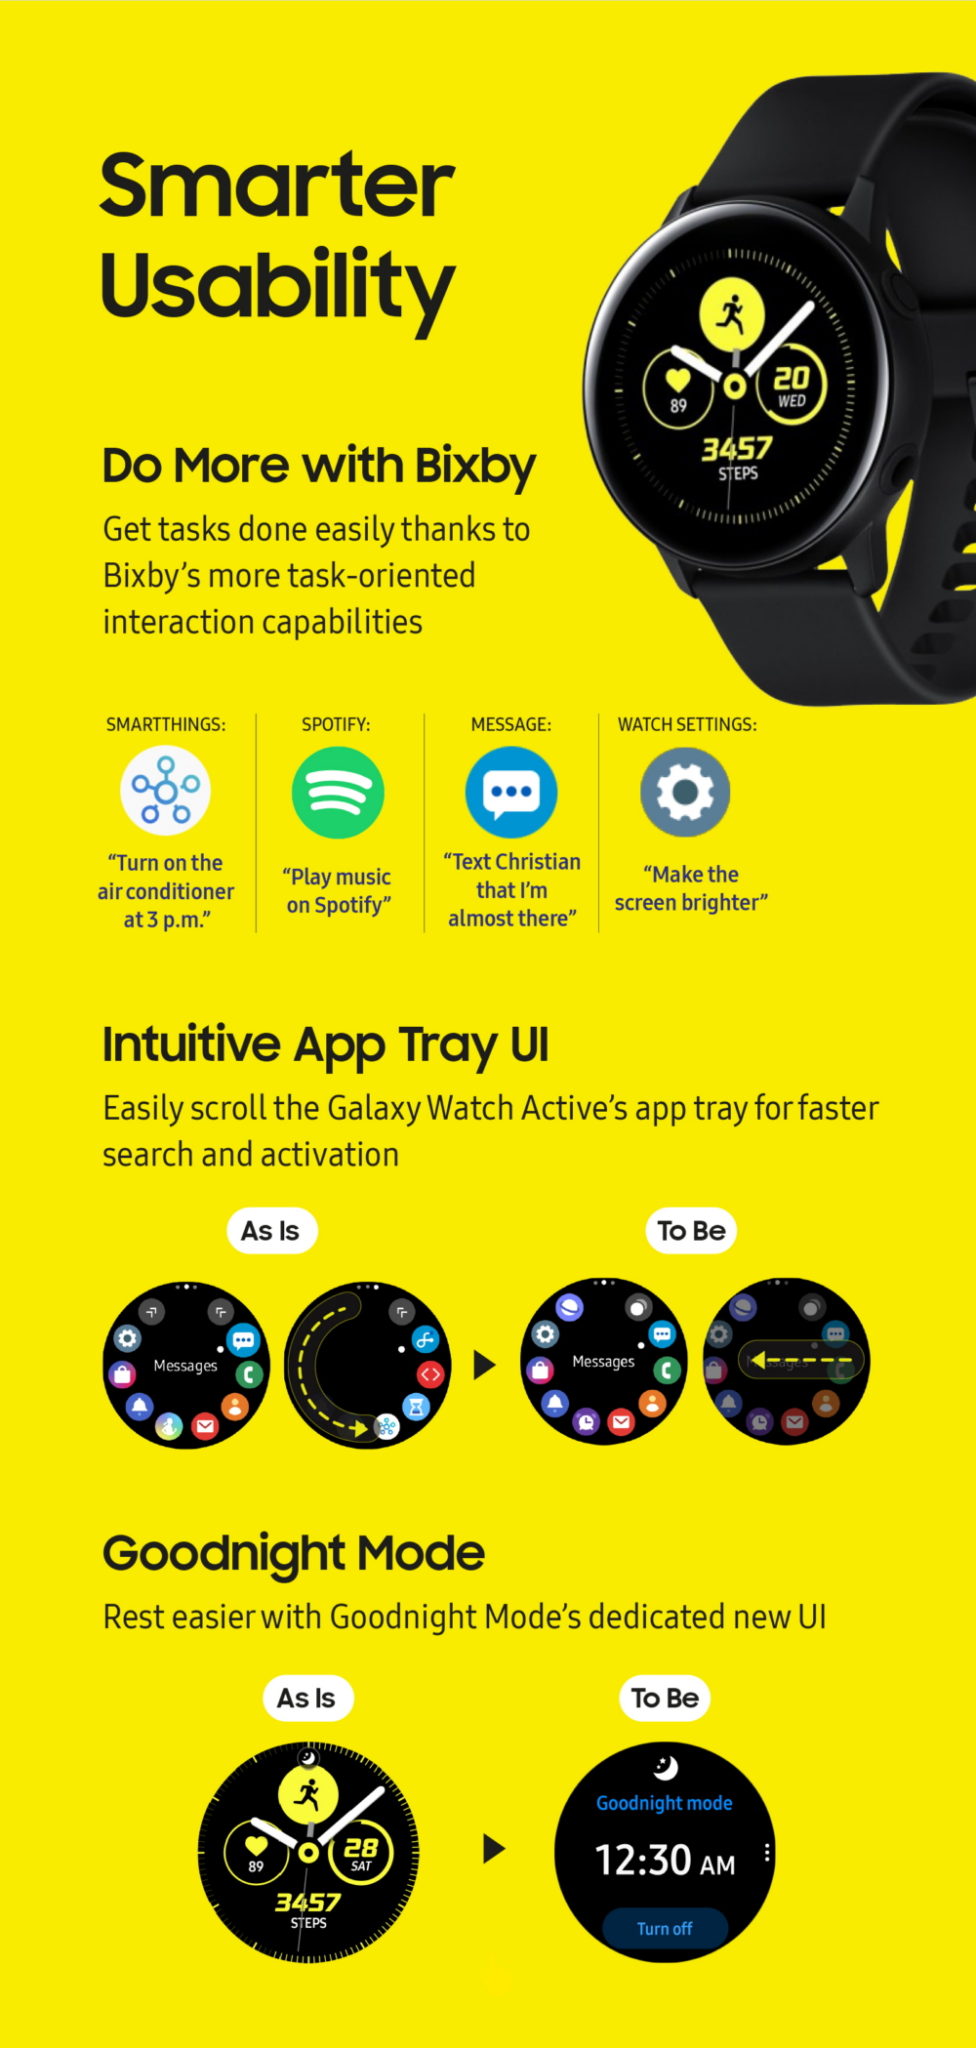 Smarter, Sportier, Snazzier: The Galaxy Watch Active’s Latest Updates